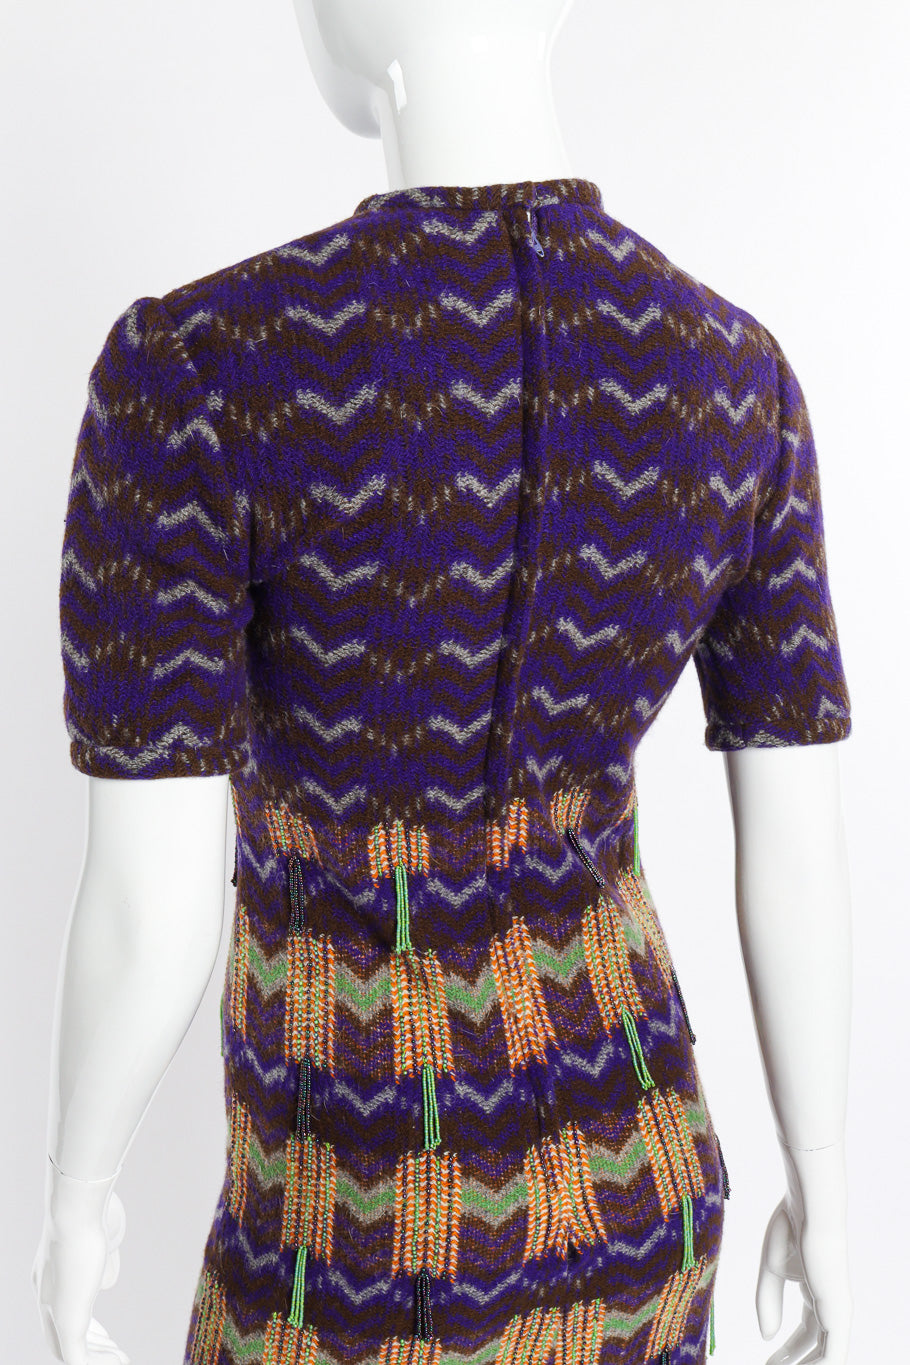 Vintage Richard Tam/Jon Mandl Chevron Knit Loop Dress back on mannequin closeup @recessla